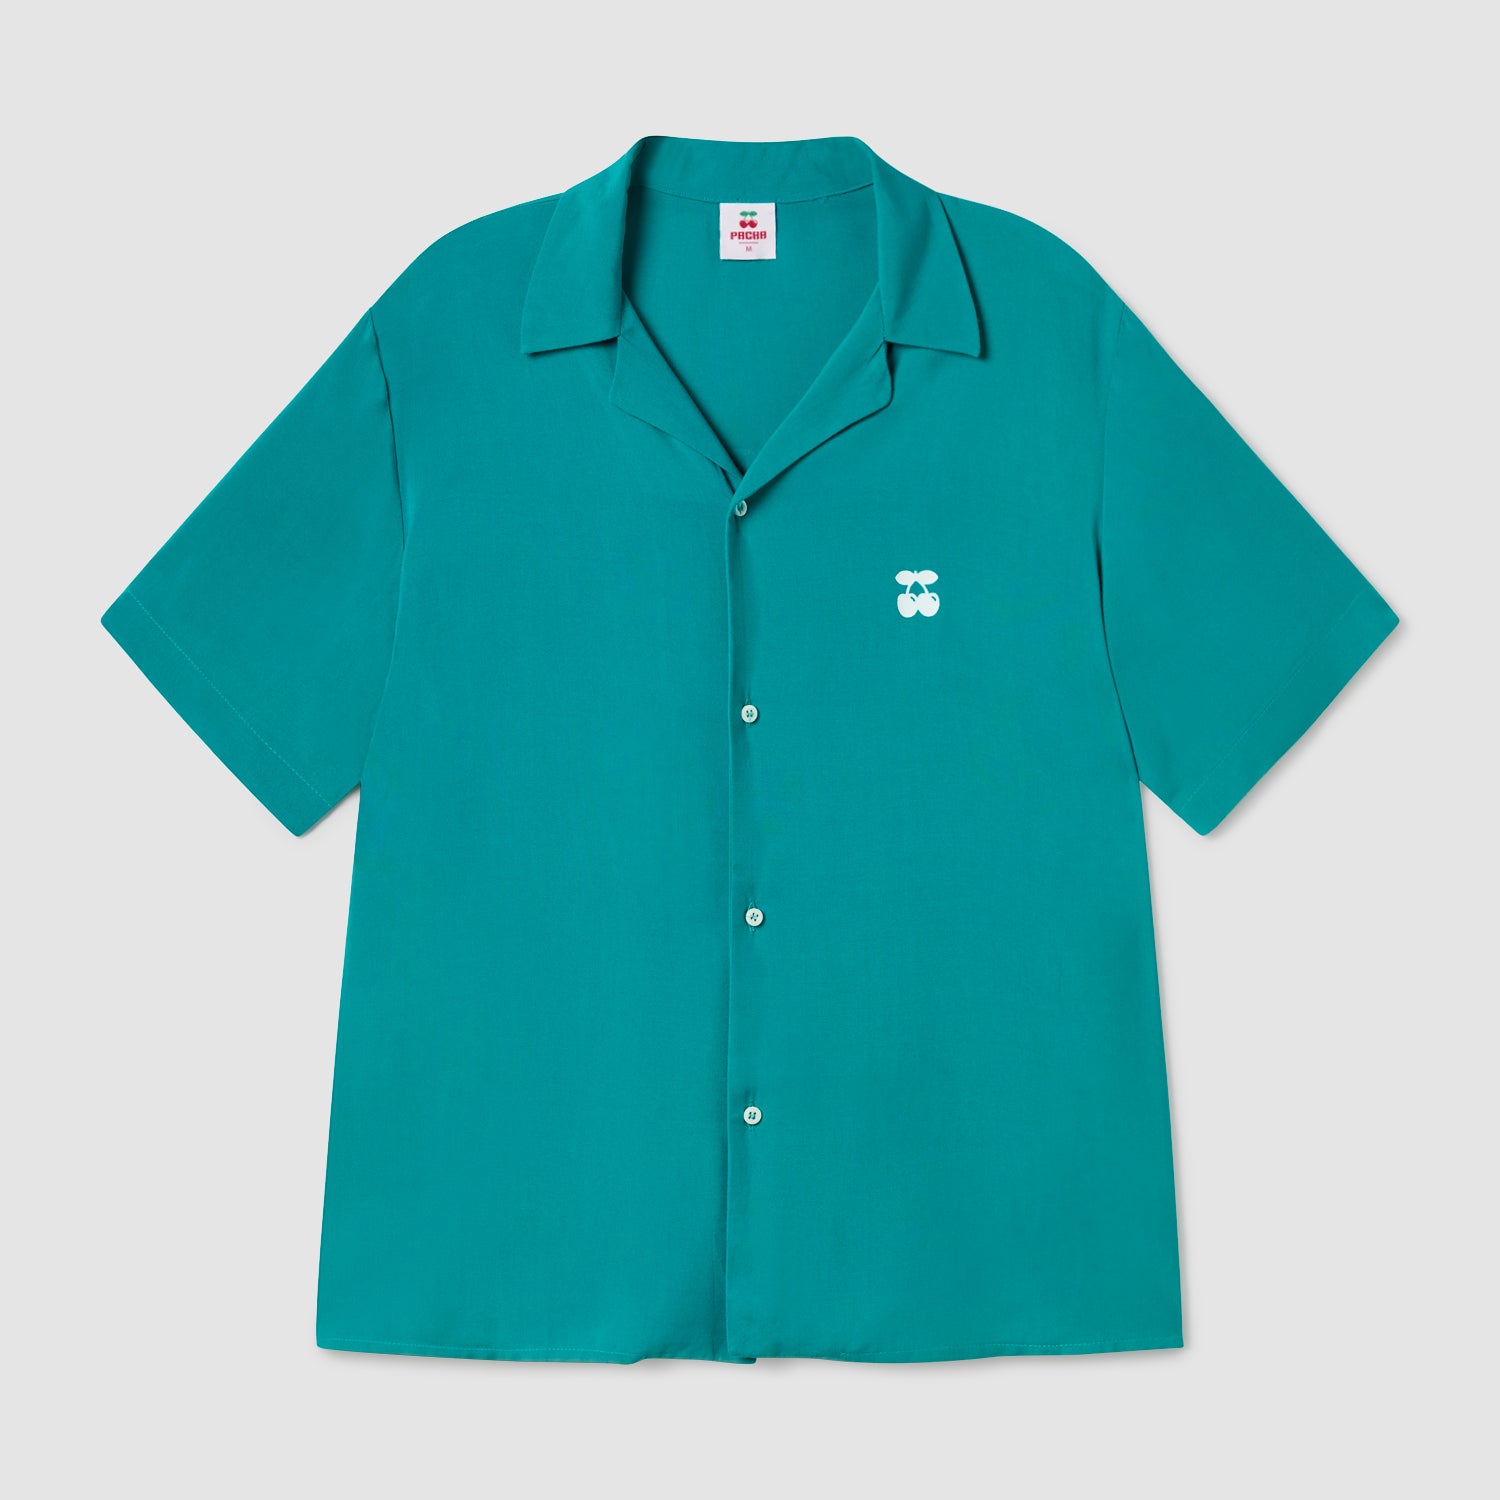 Green 50th Anniversary Shirt